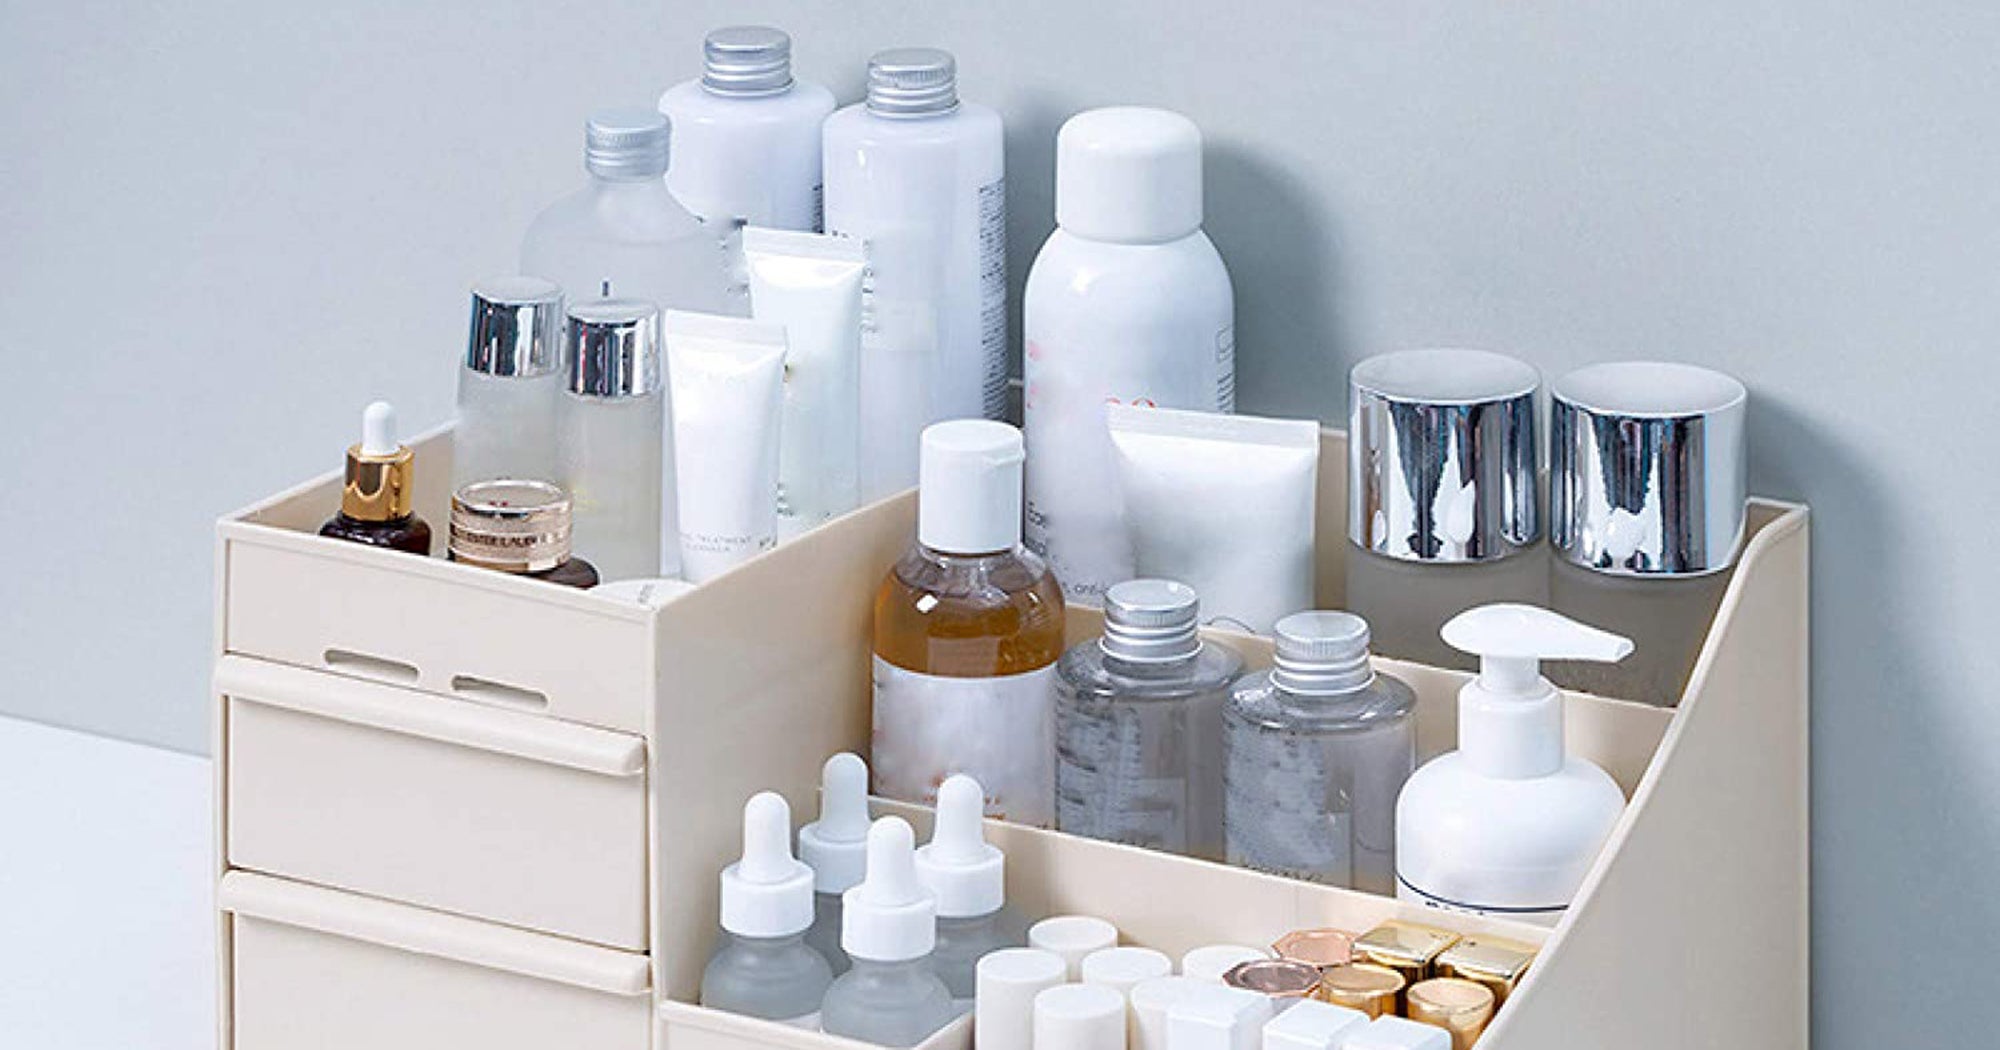 Bathroom Counter Organizers & Stylish Storage Solutions